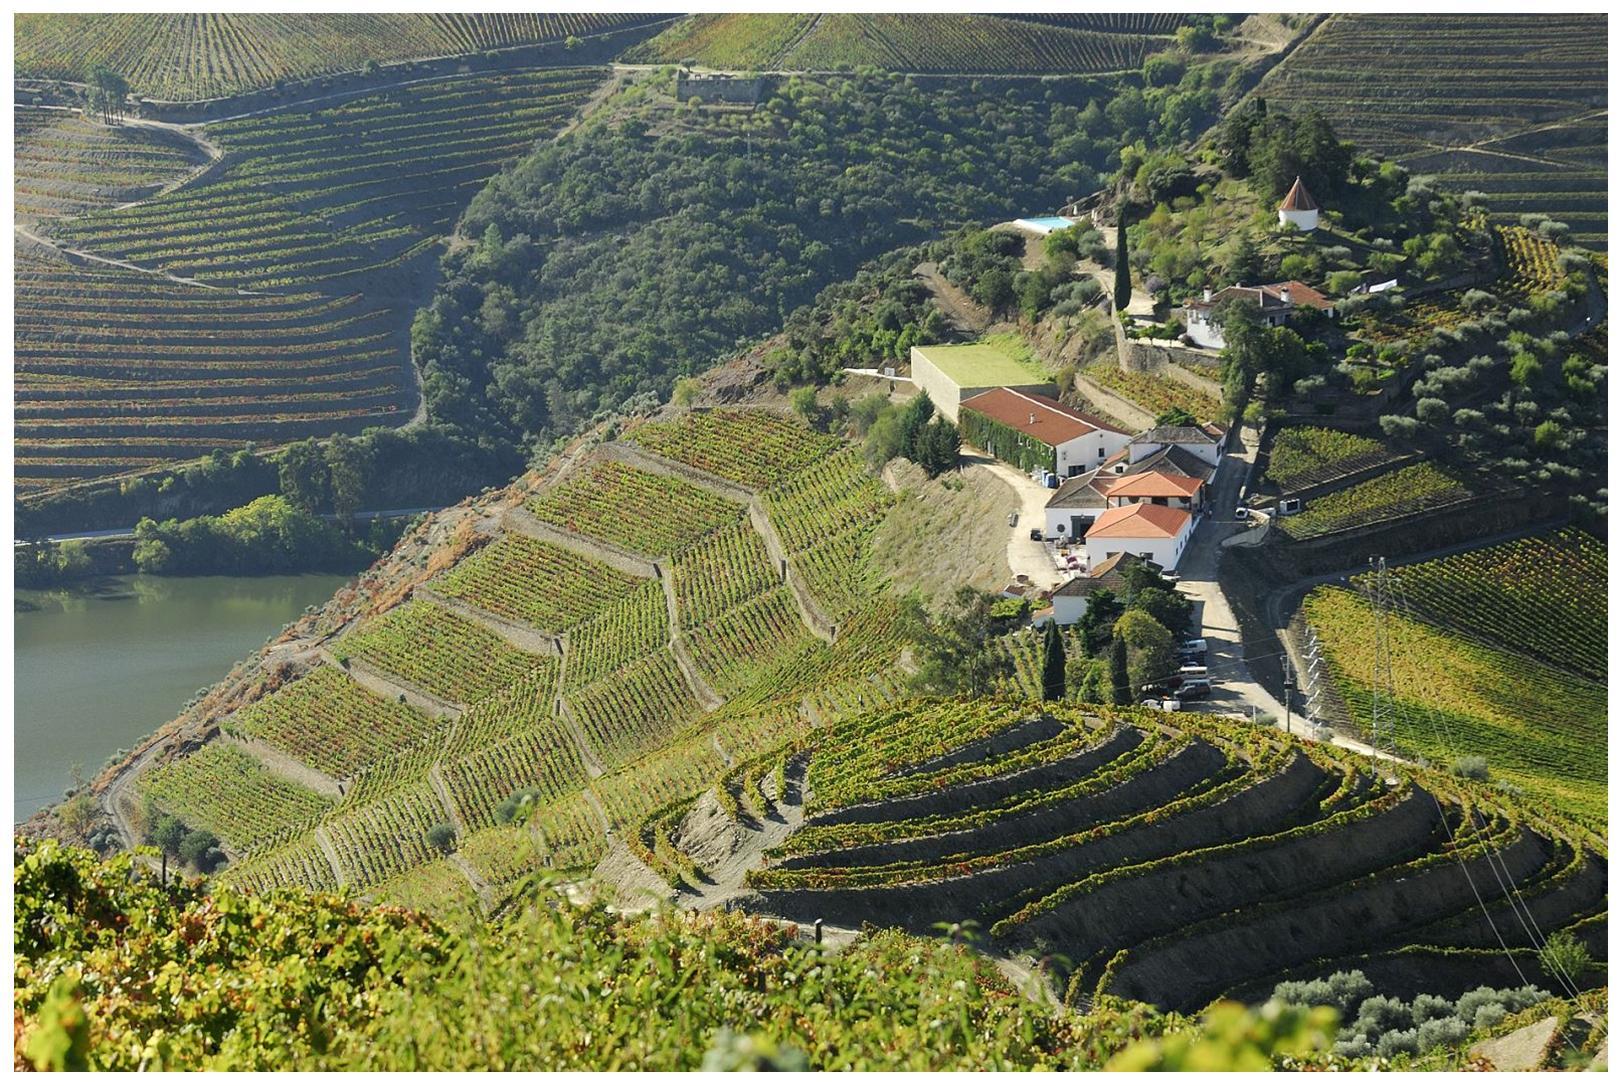 La perspective de la quinta do Crasto sur les vignes en terrasse de la vallée du Douro